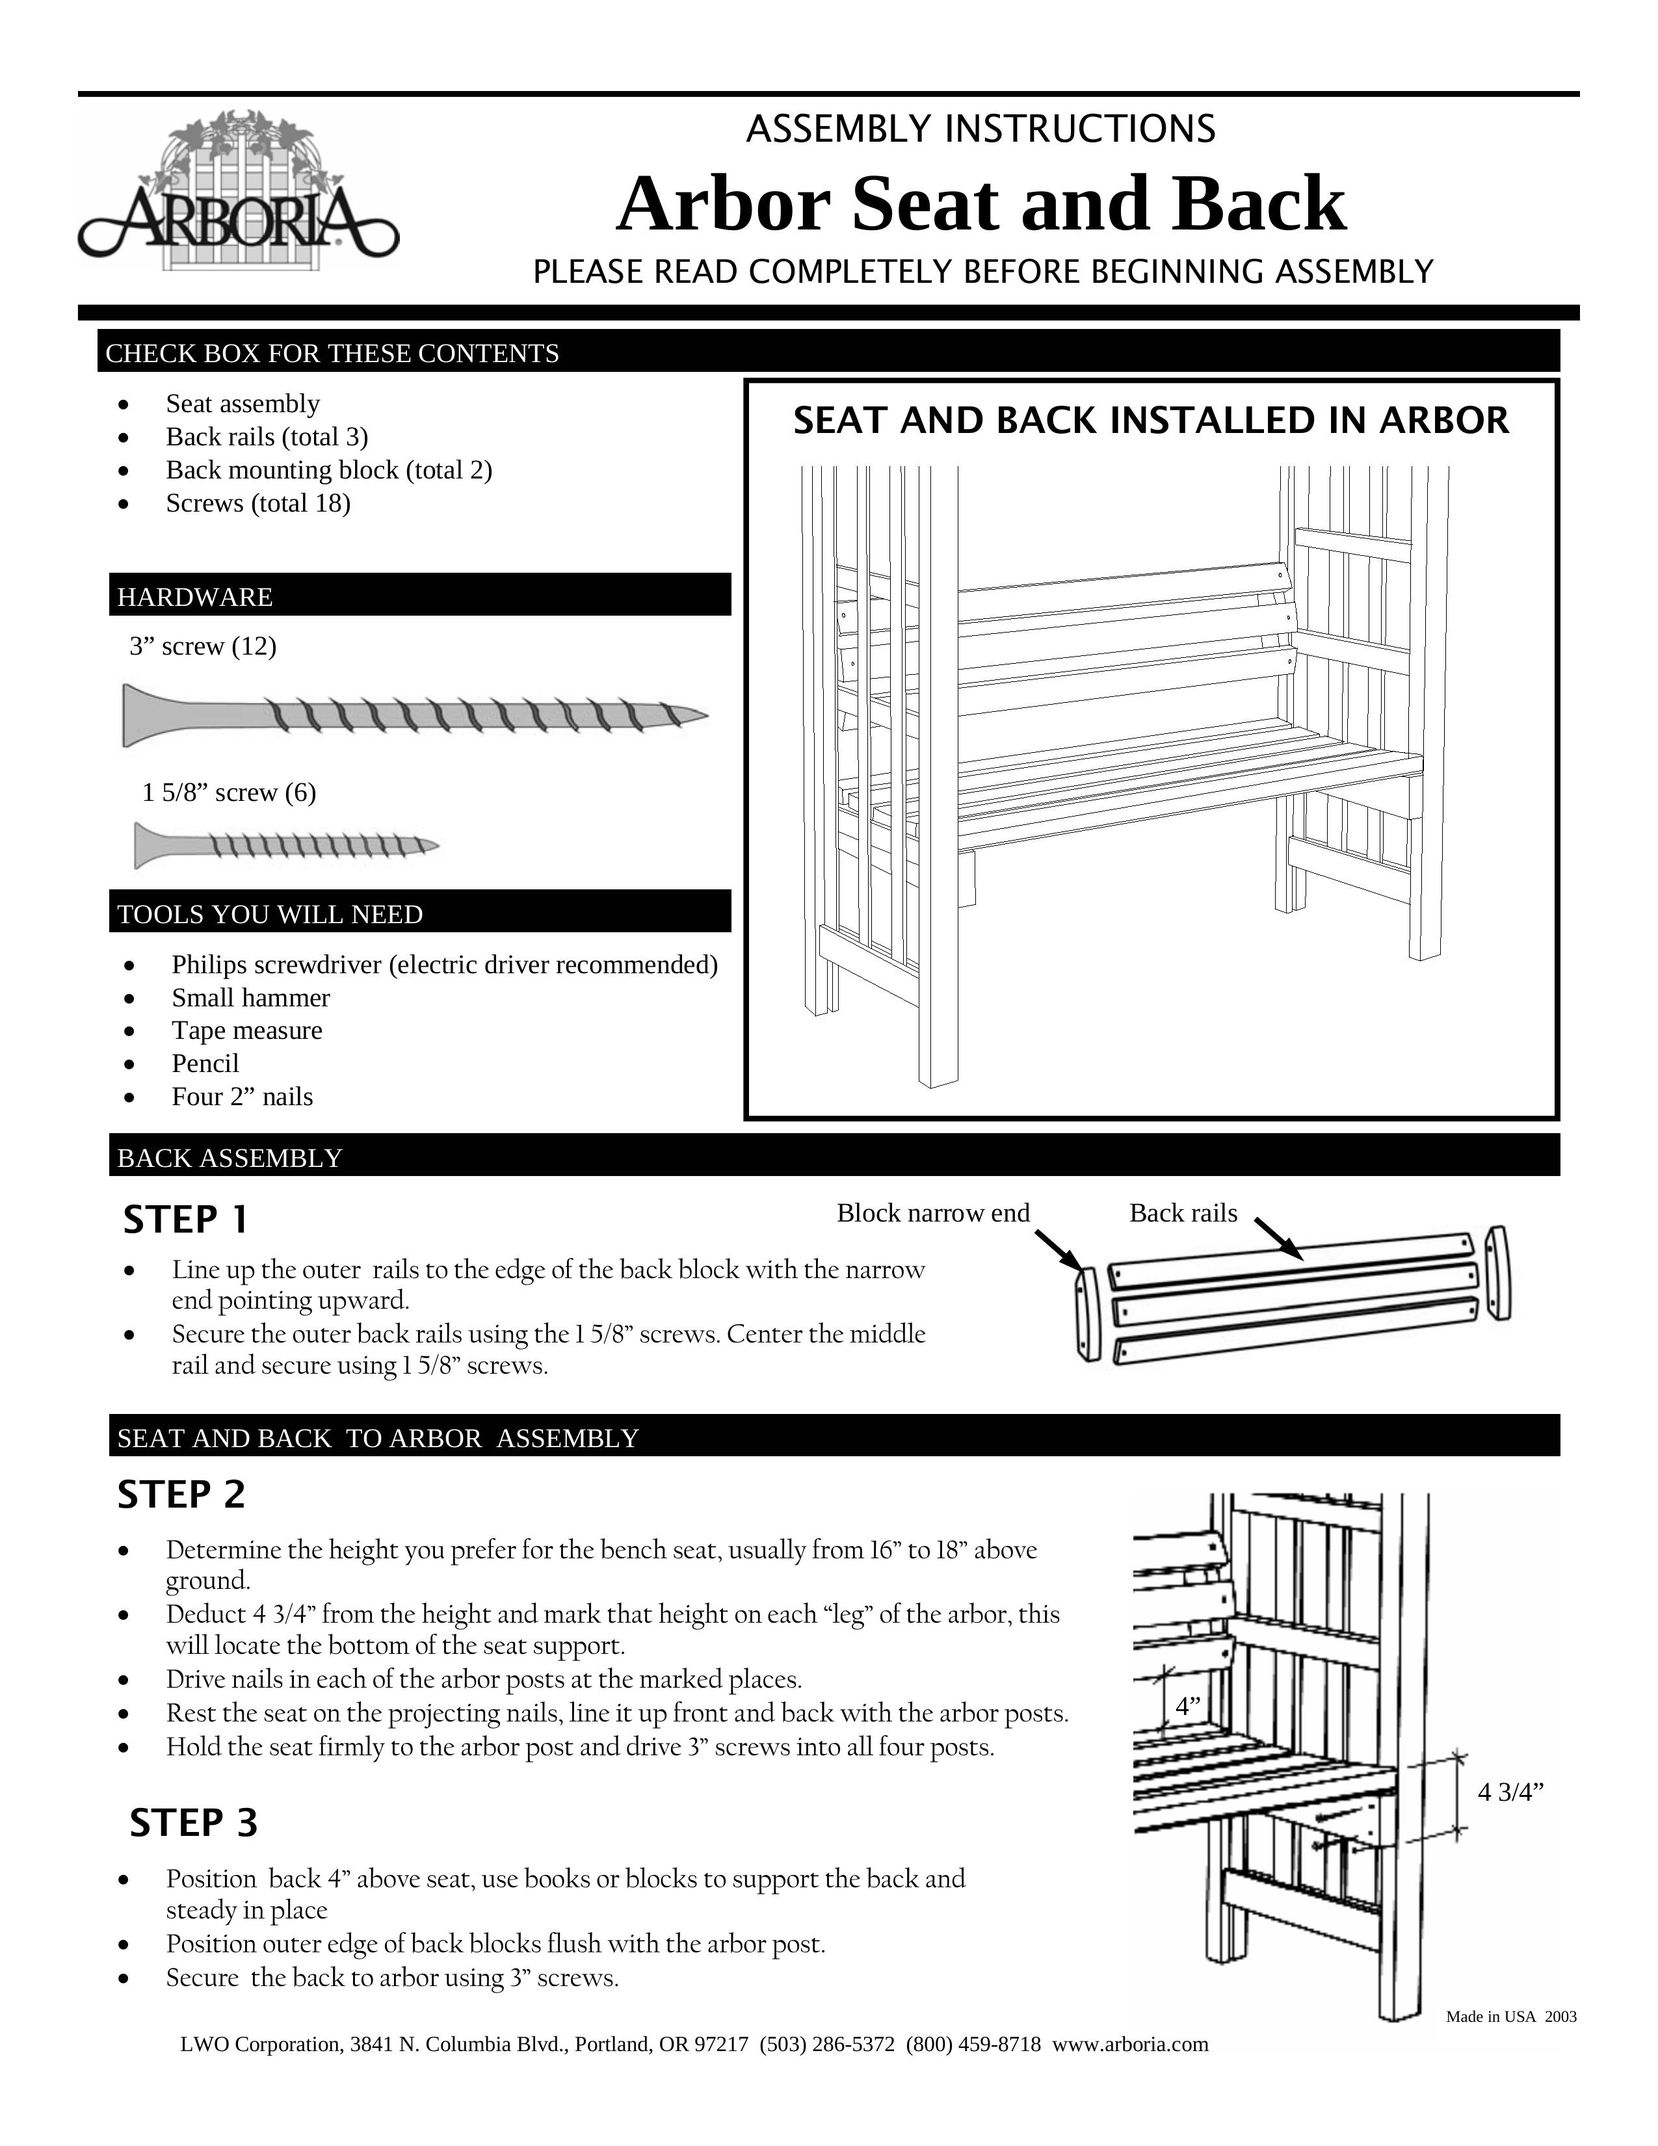 Arboria Seat and Back Indoor Furnishings User Manual